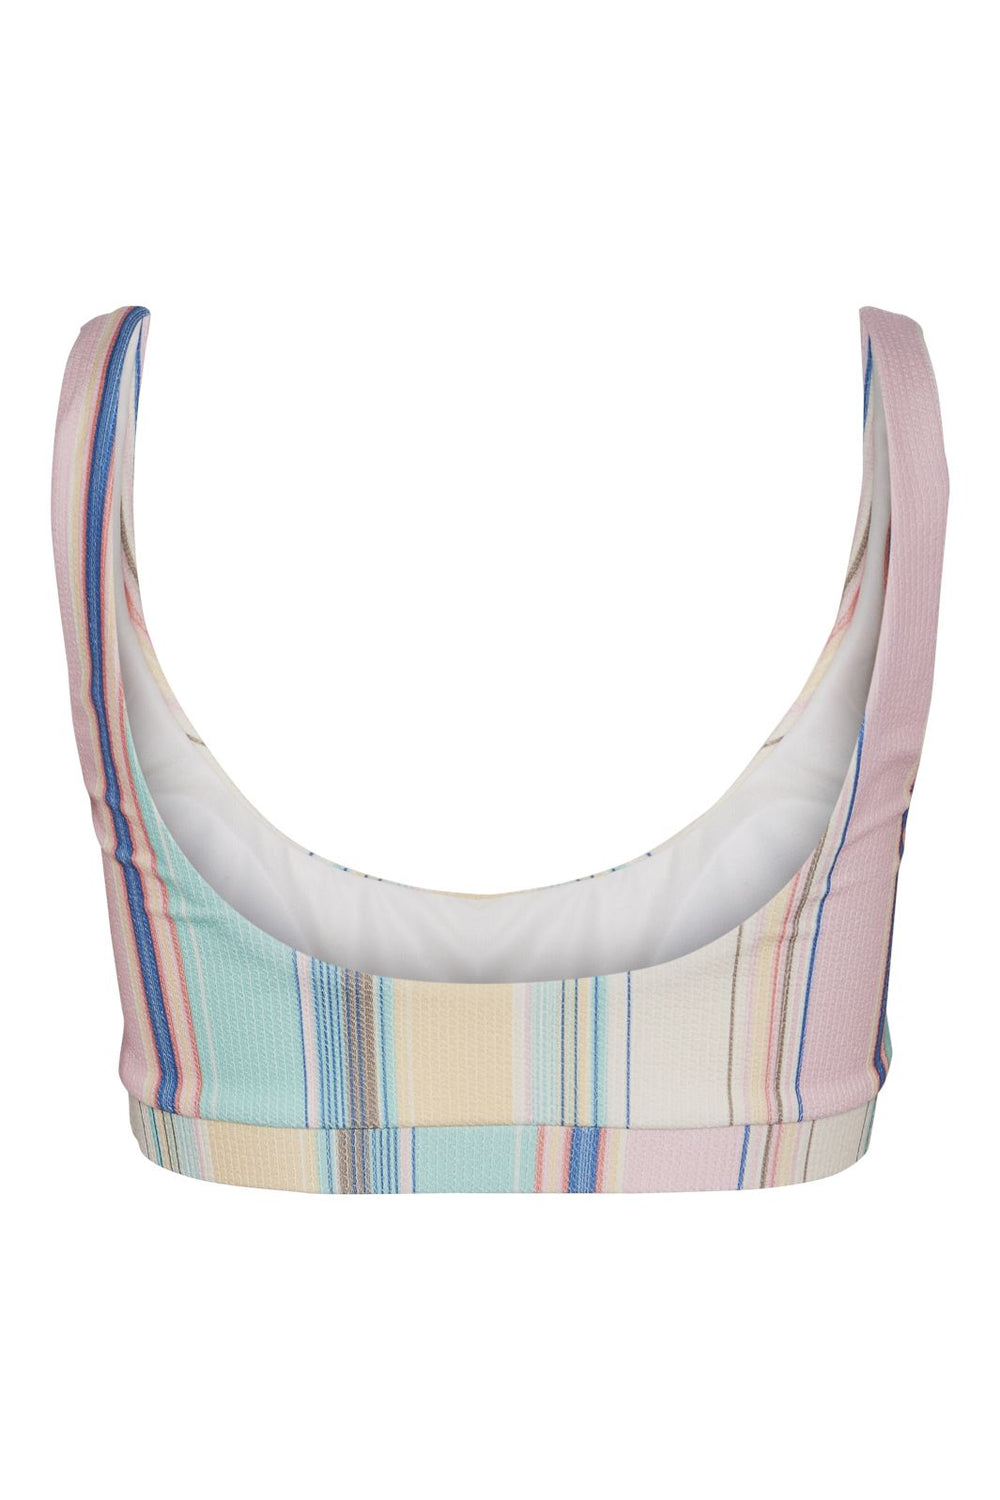 Pieces - Pcaia Bikini Top Sww - 4430897 Eggnog Multi Color Stripe